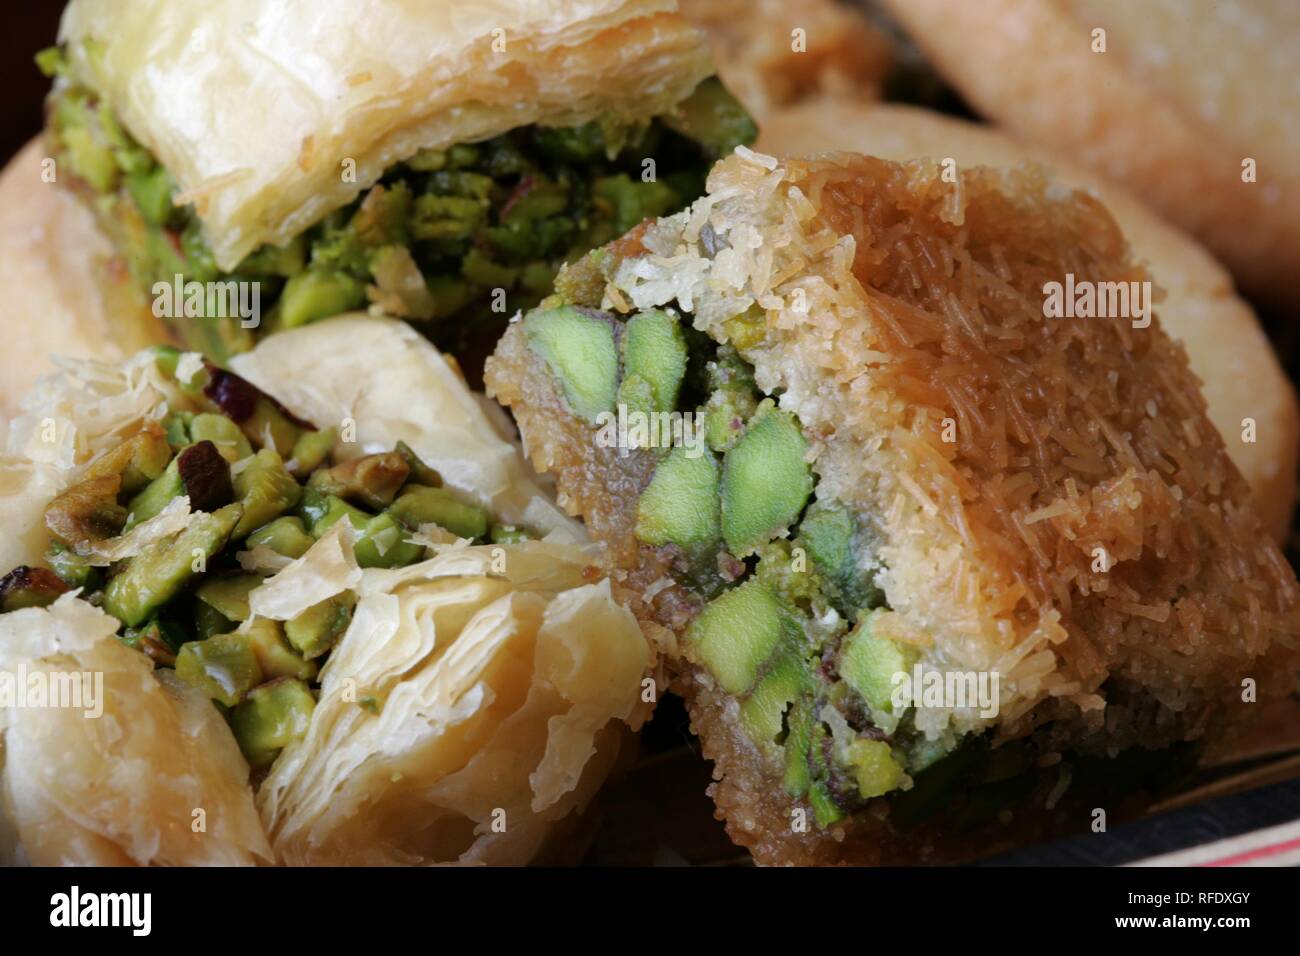 JOR, Giordania, Amman: tipici dolci arabi, pistacchio, allmonds wraped in  pasta sfoglia | Foto stock - Alamy